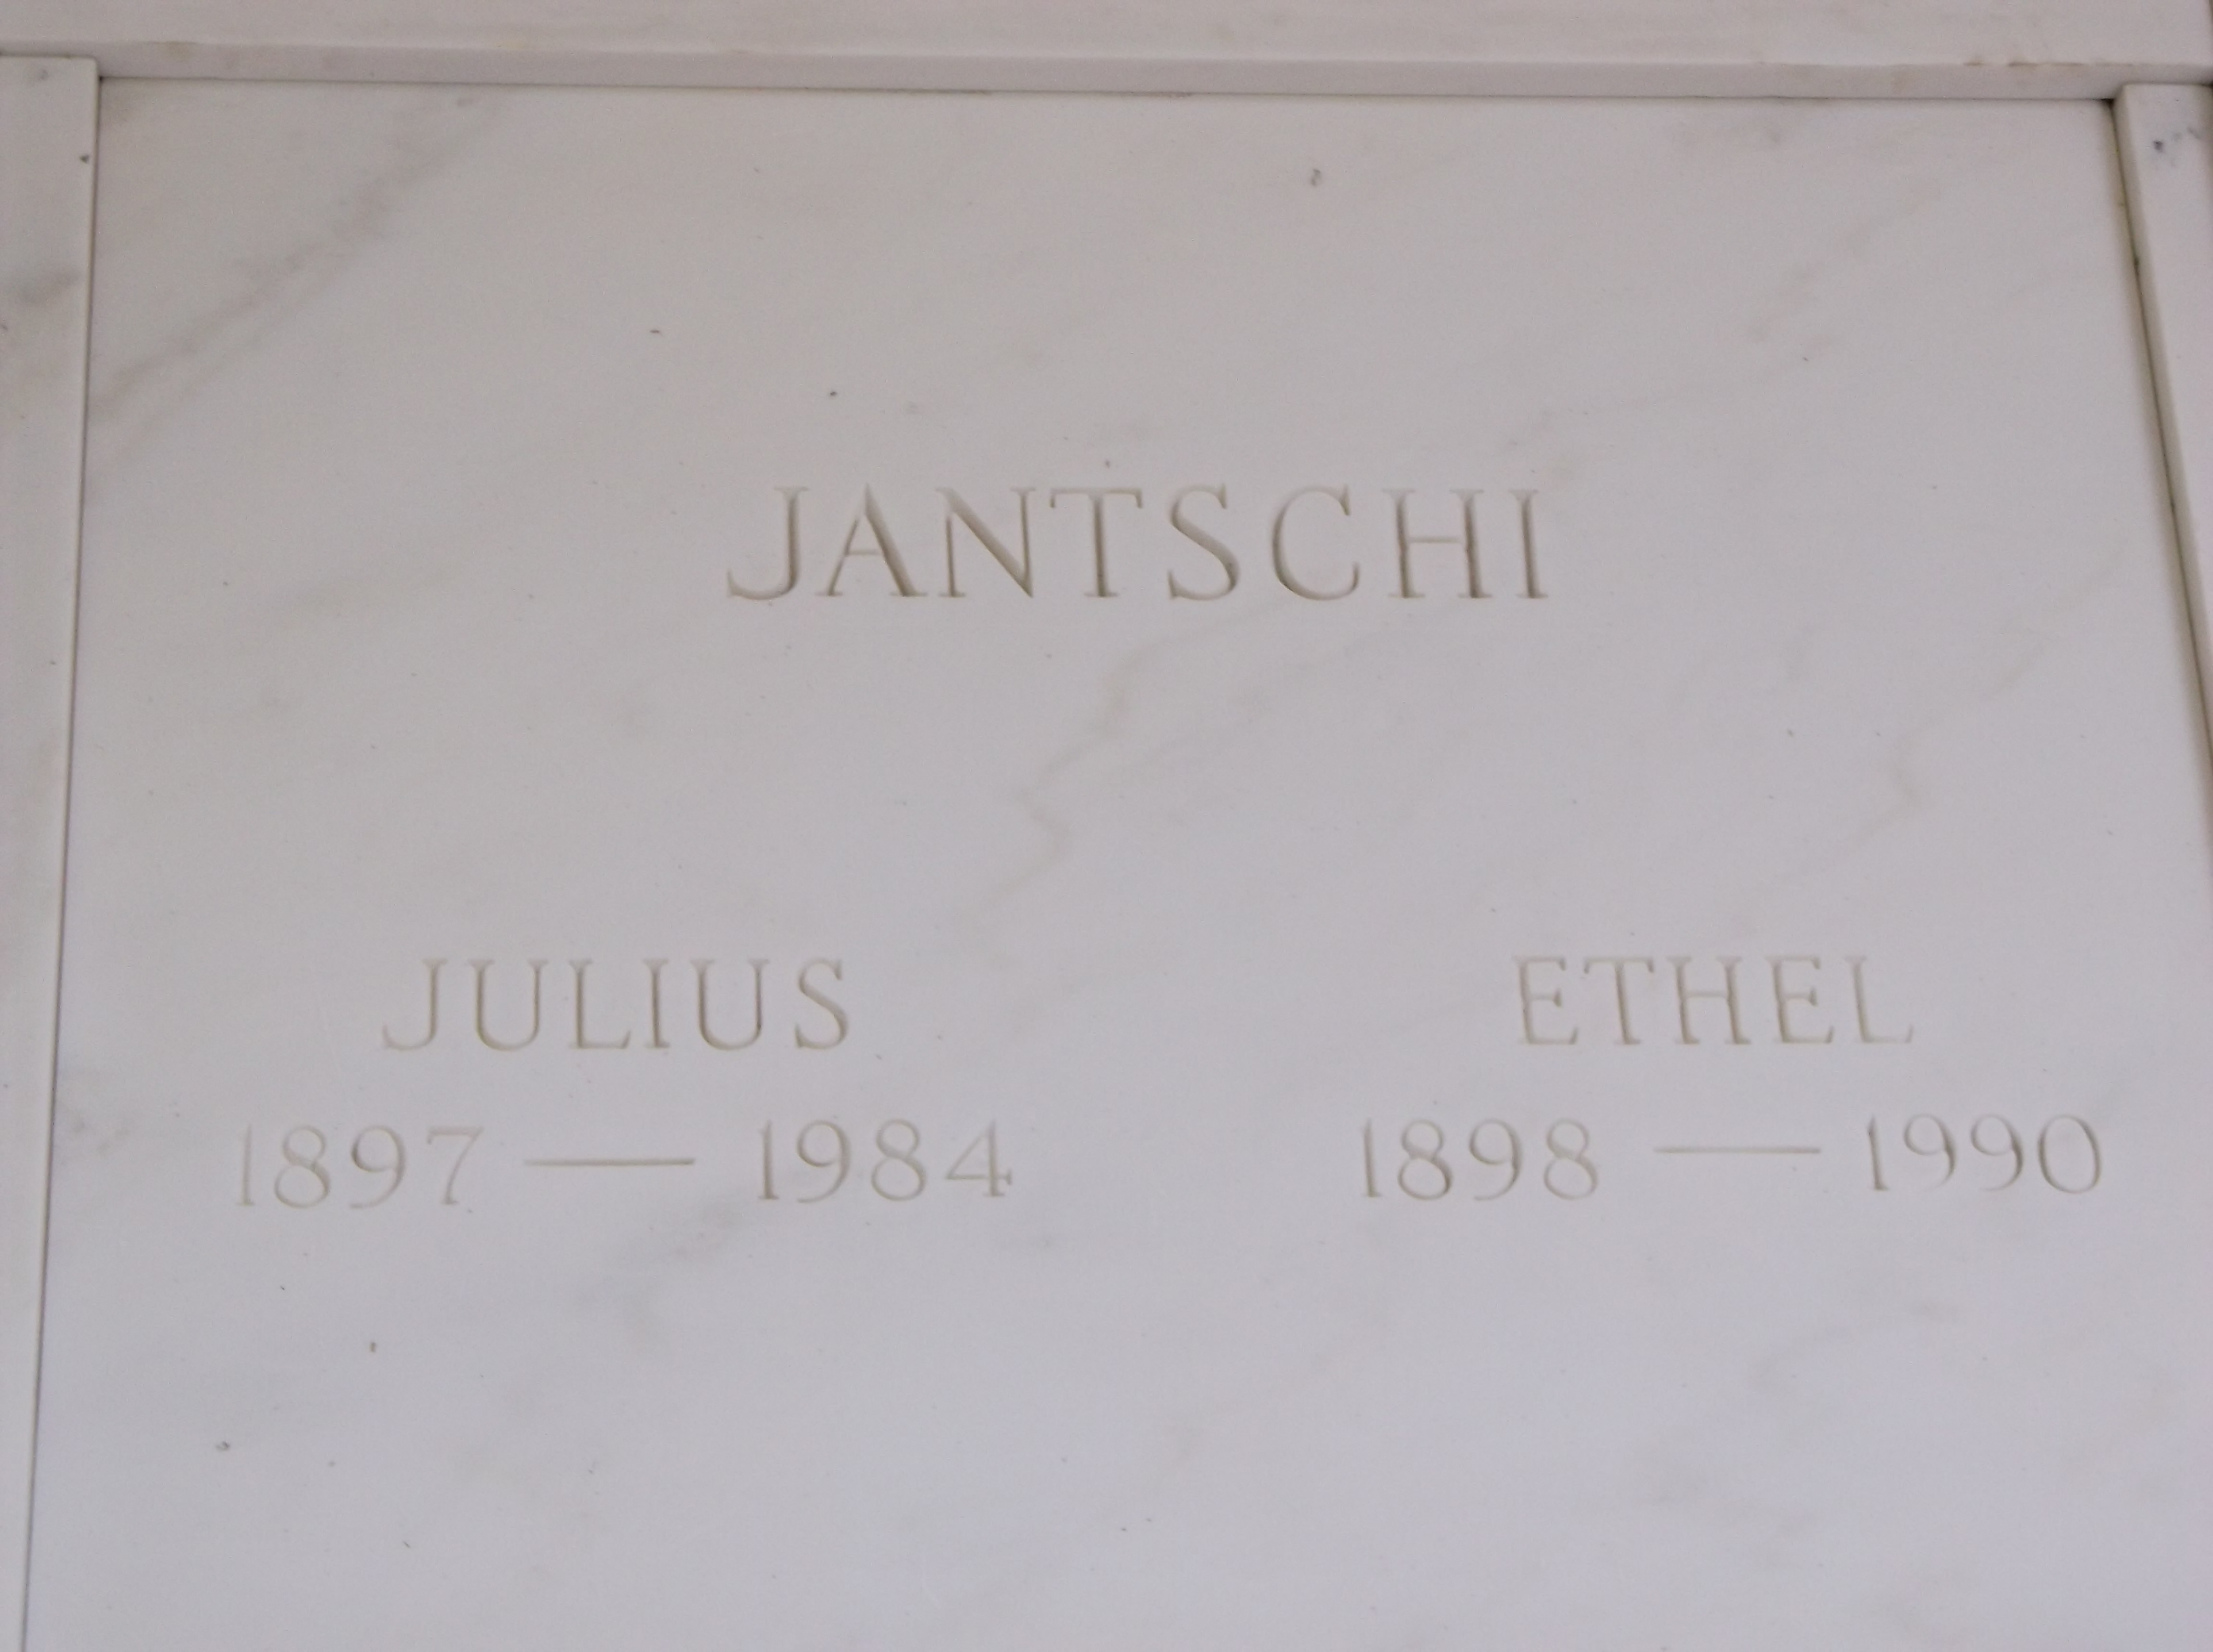 Ethel Jantschi